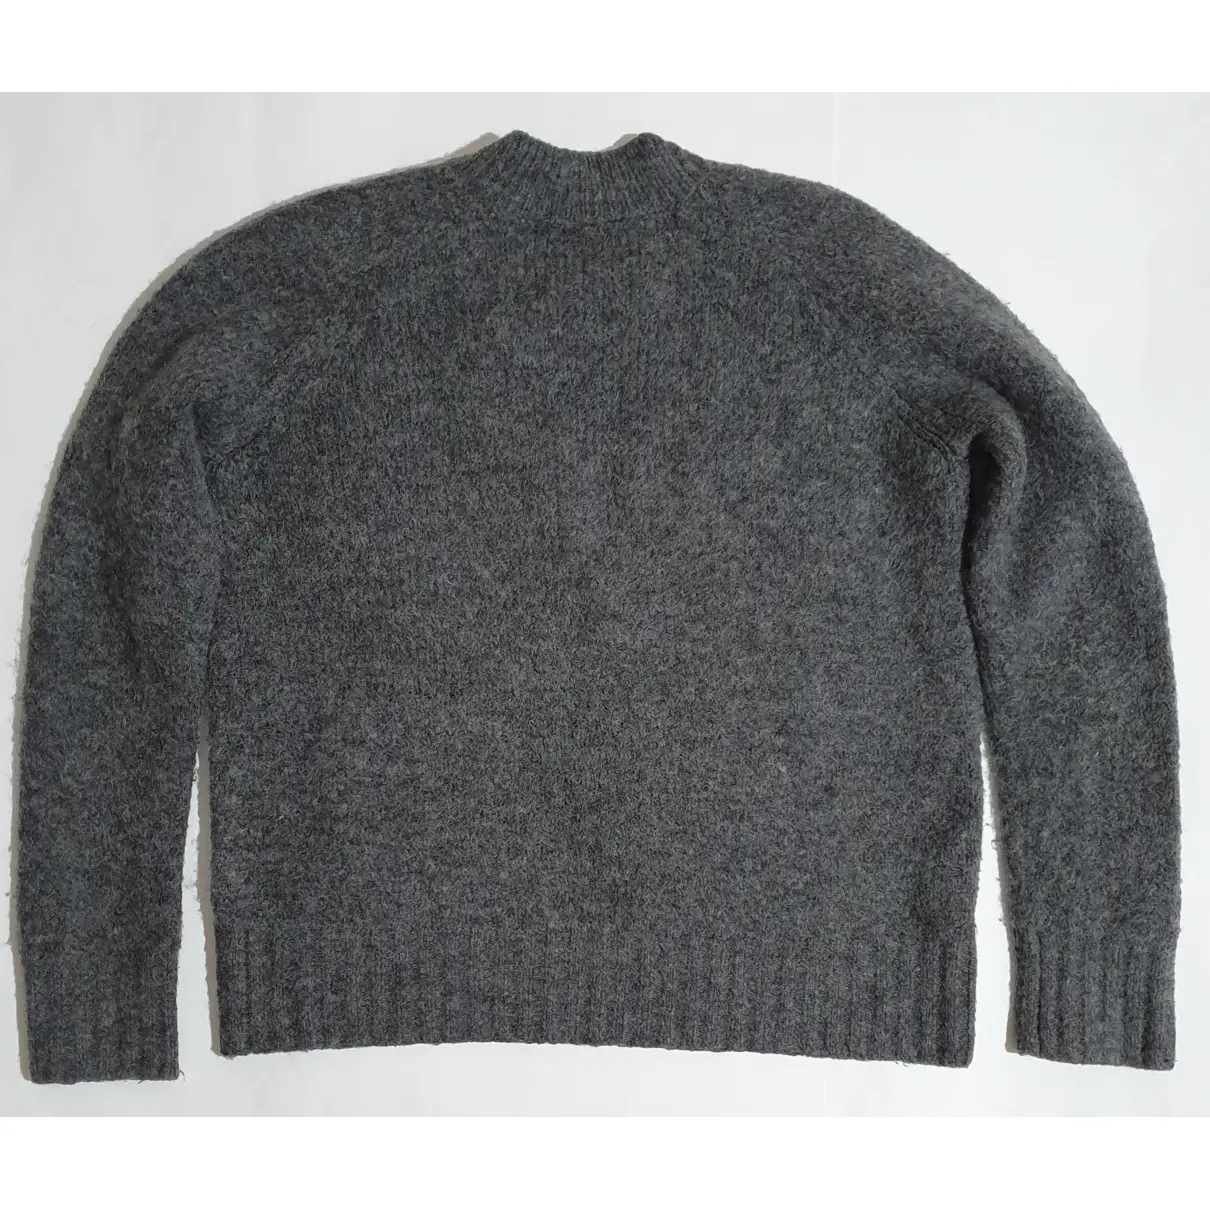 Envii Wool jumper for sale